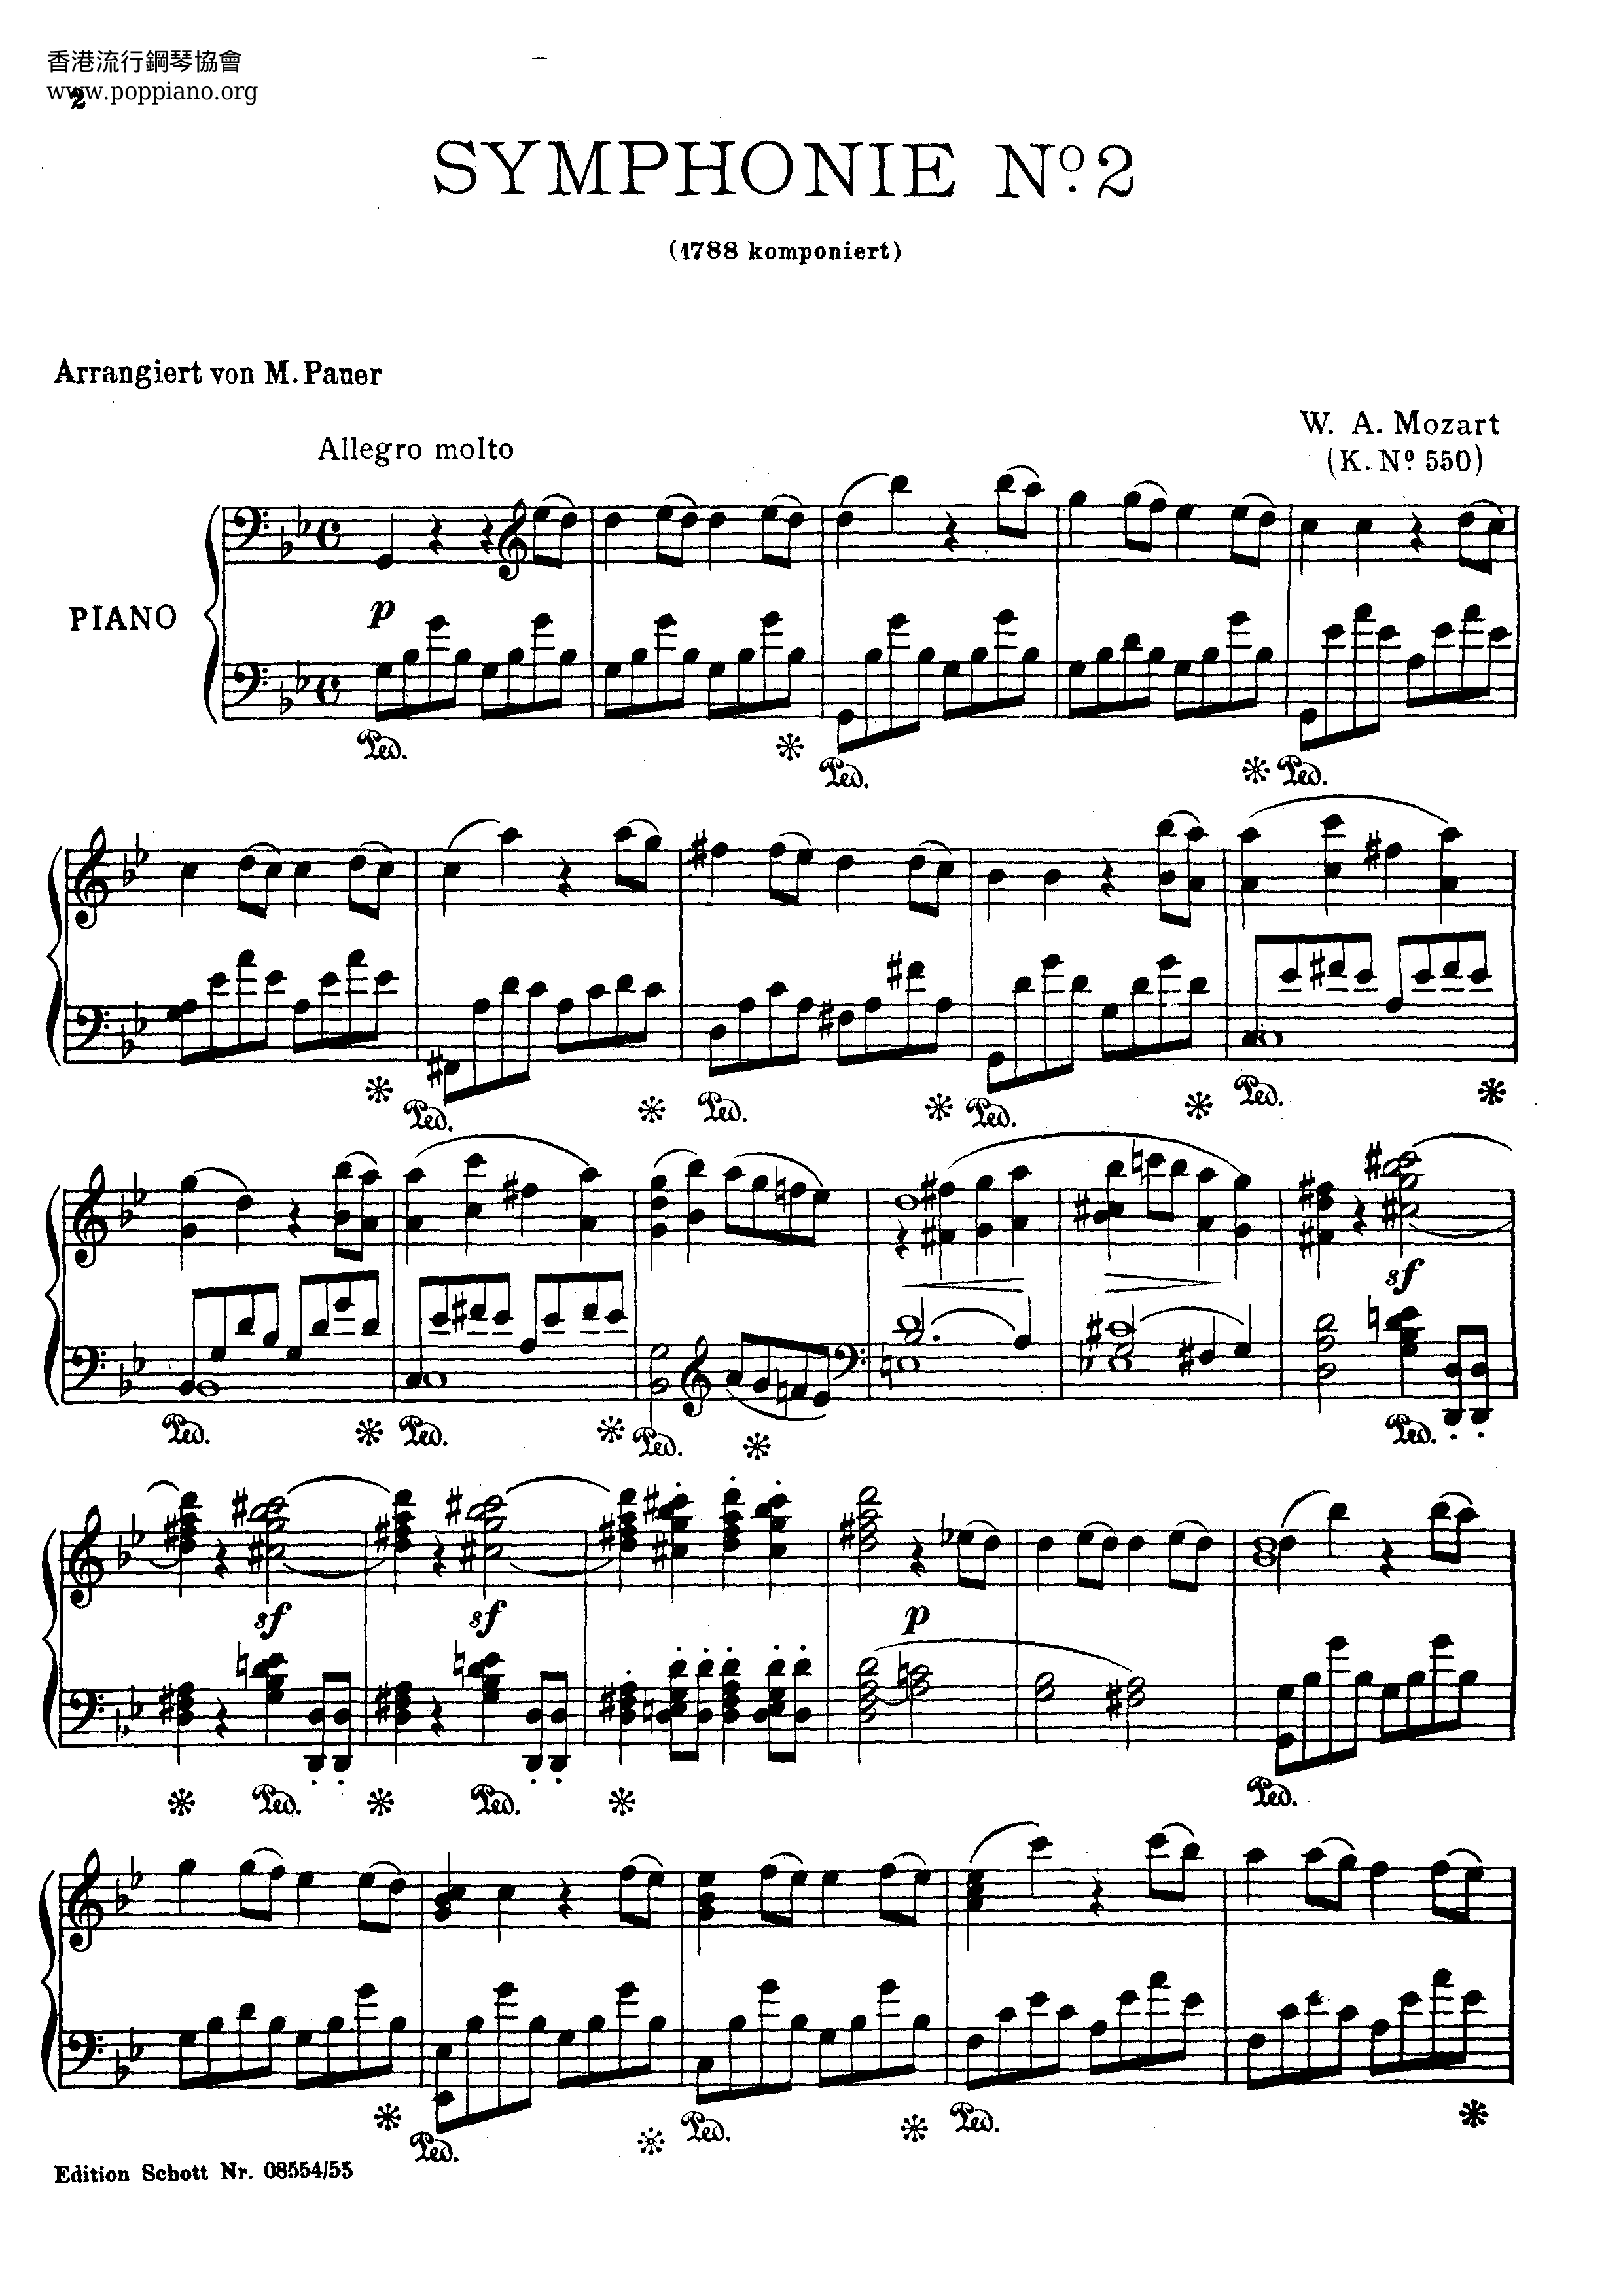 Symphony No.40 In G Minor, K. 550ピアノ譜